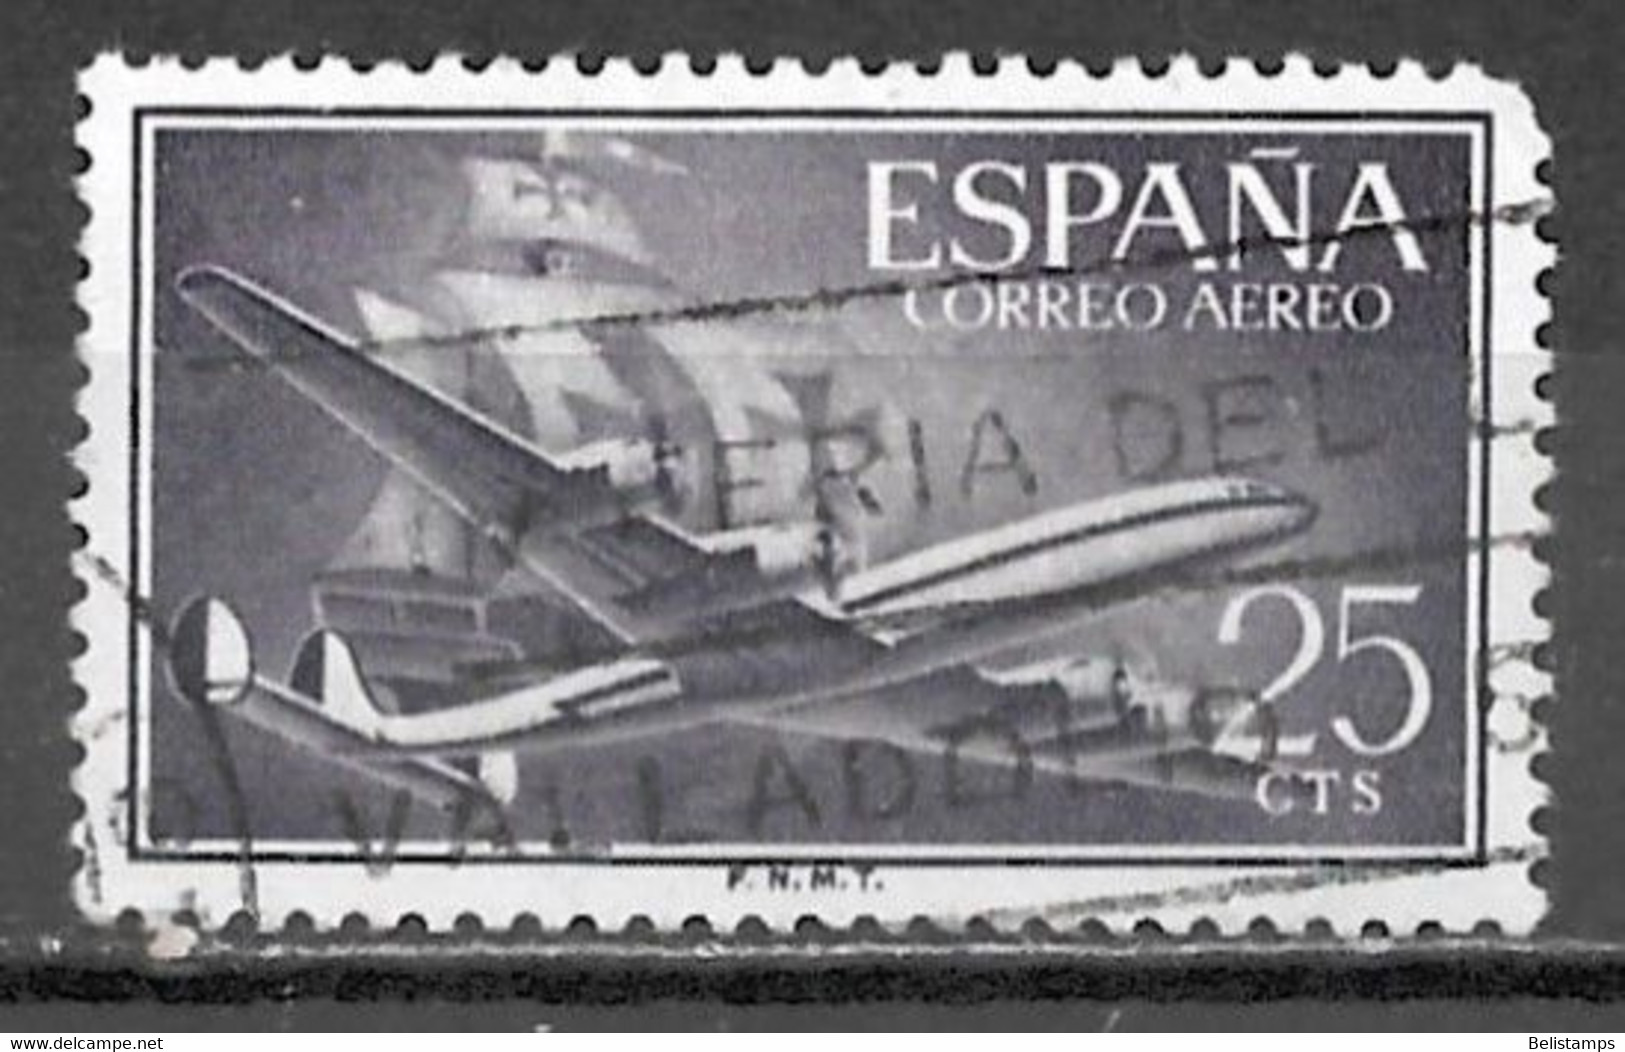 Spain 1955. Scott #C148 (U) Plane And Caravel - Usati